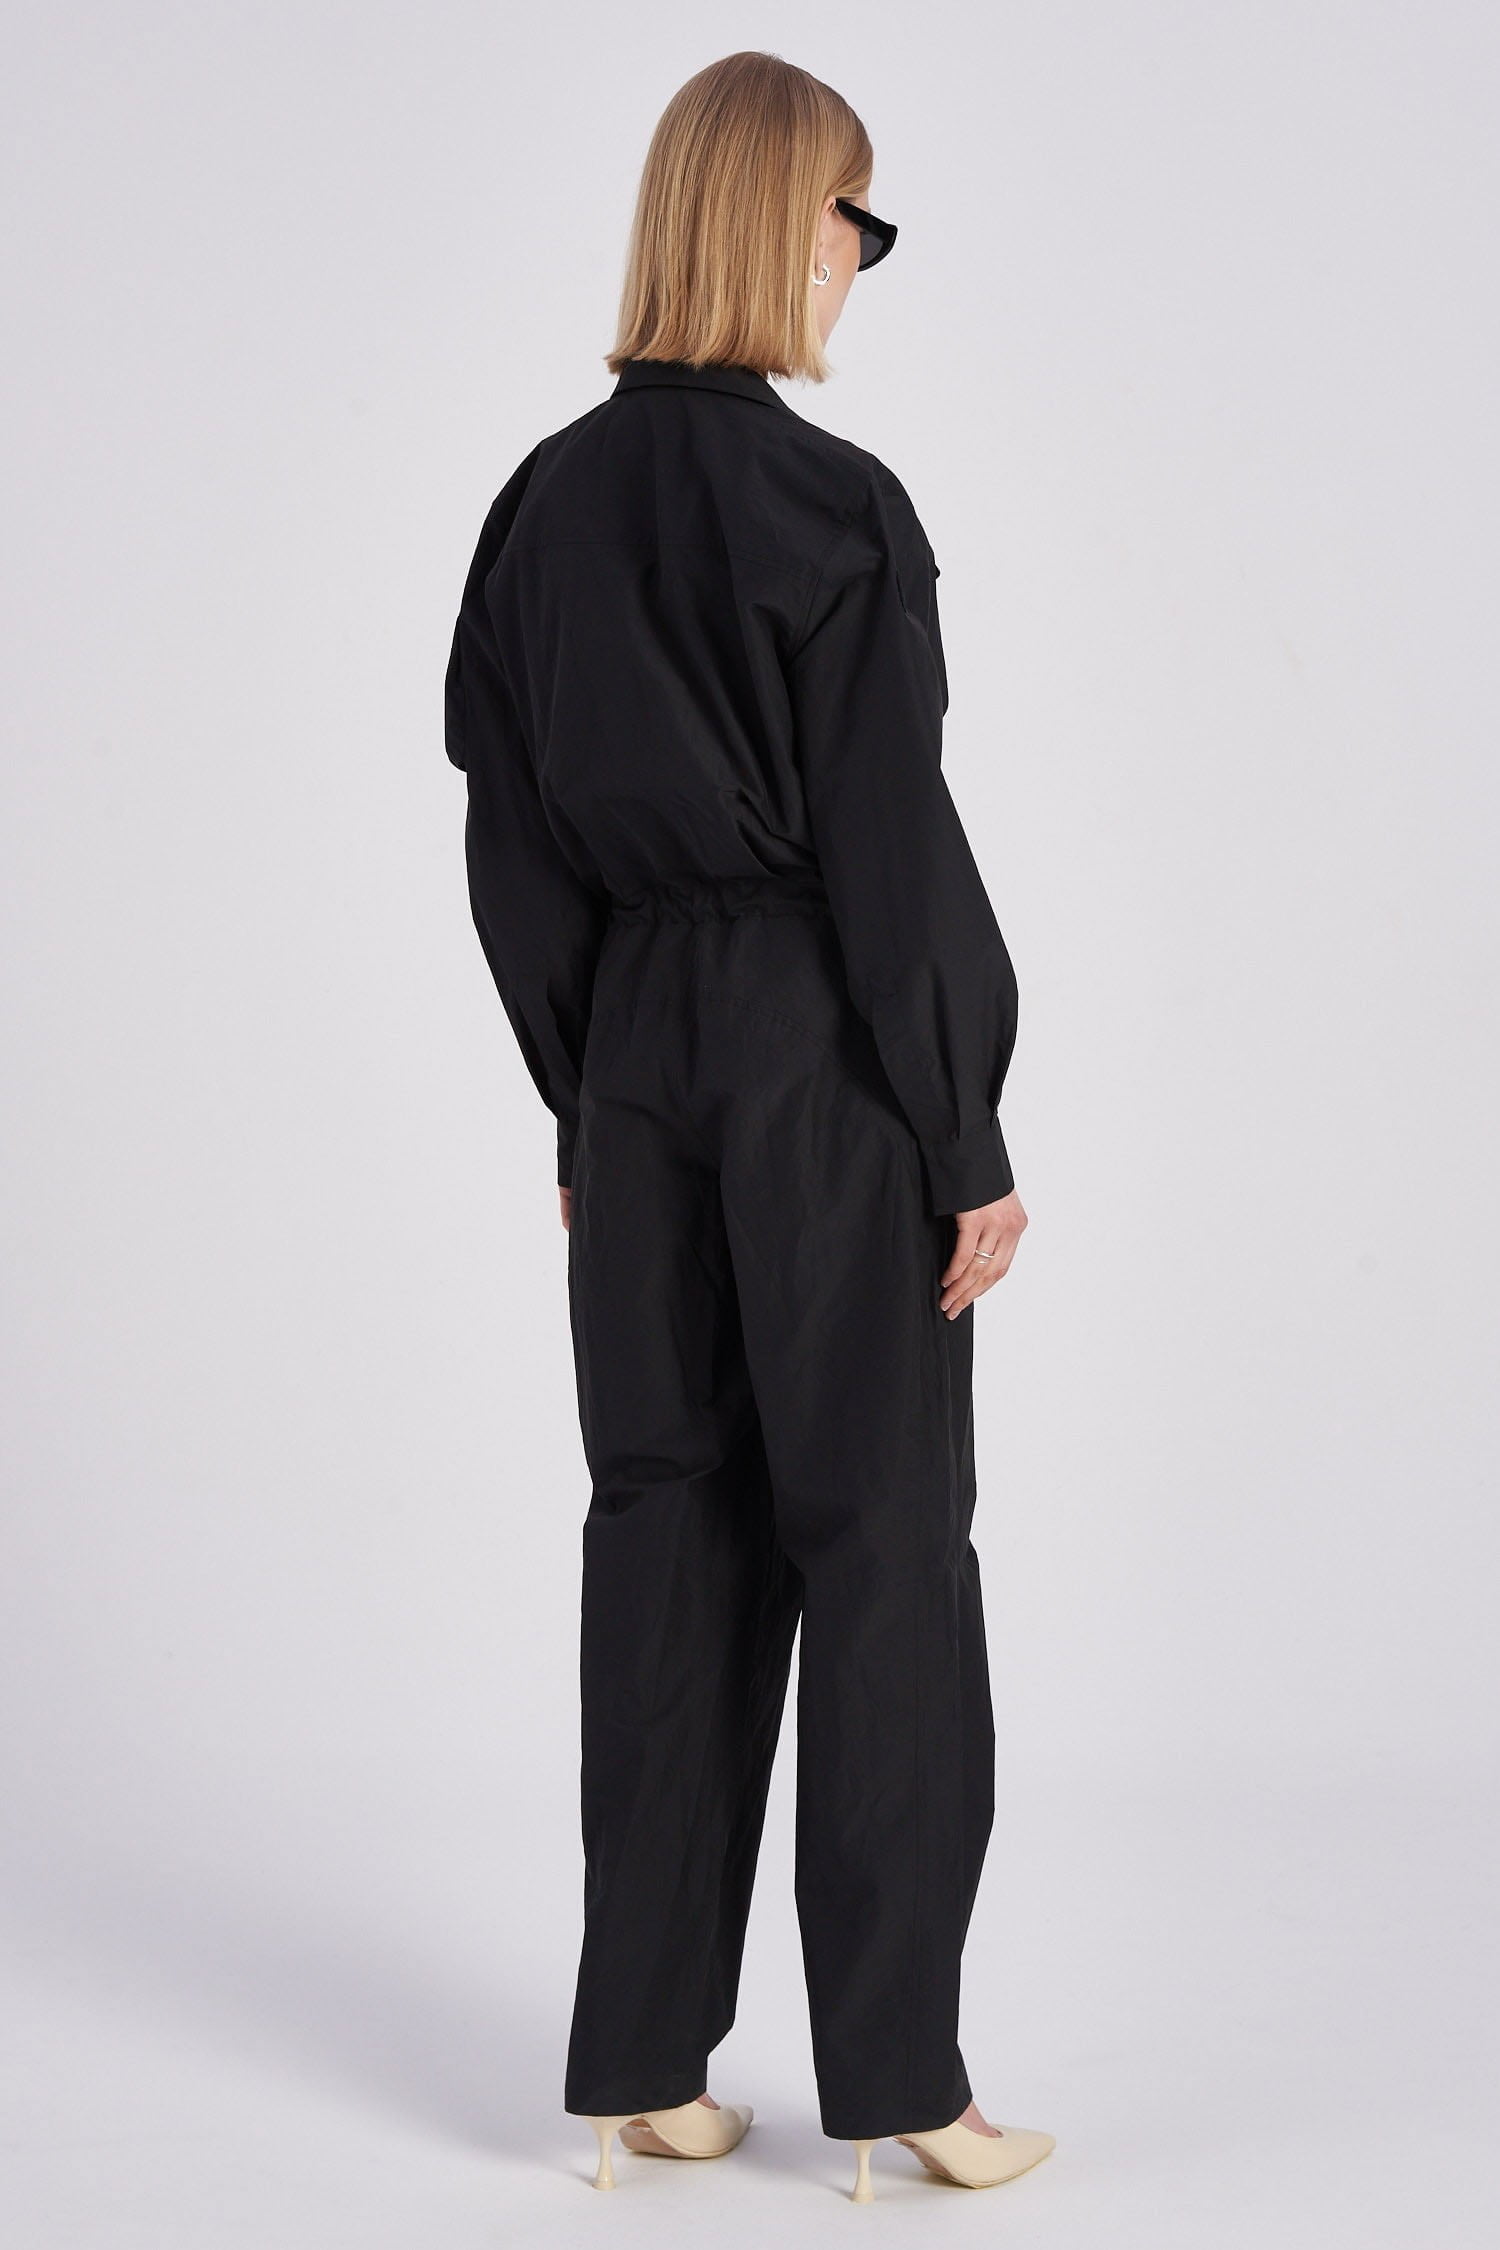 Acephala Fw2021 22 Black Jumpsuit 042